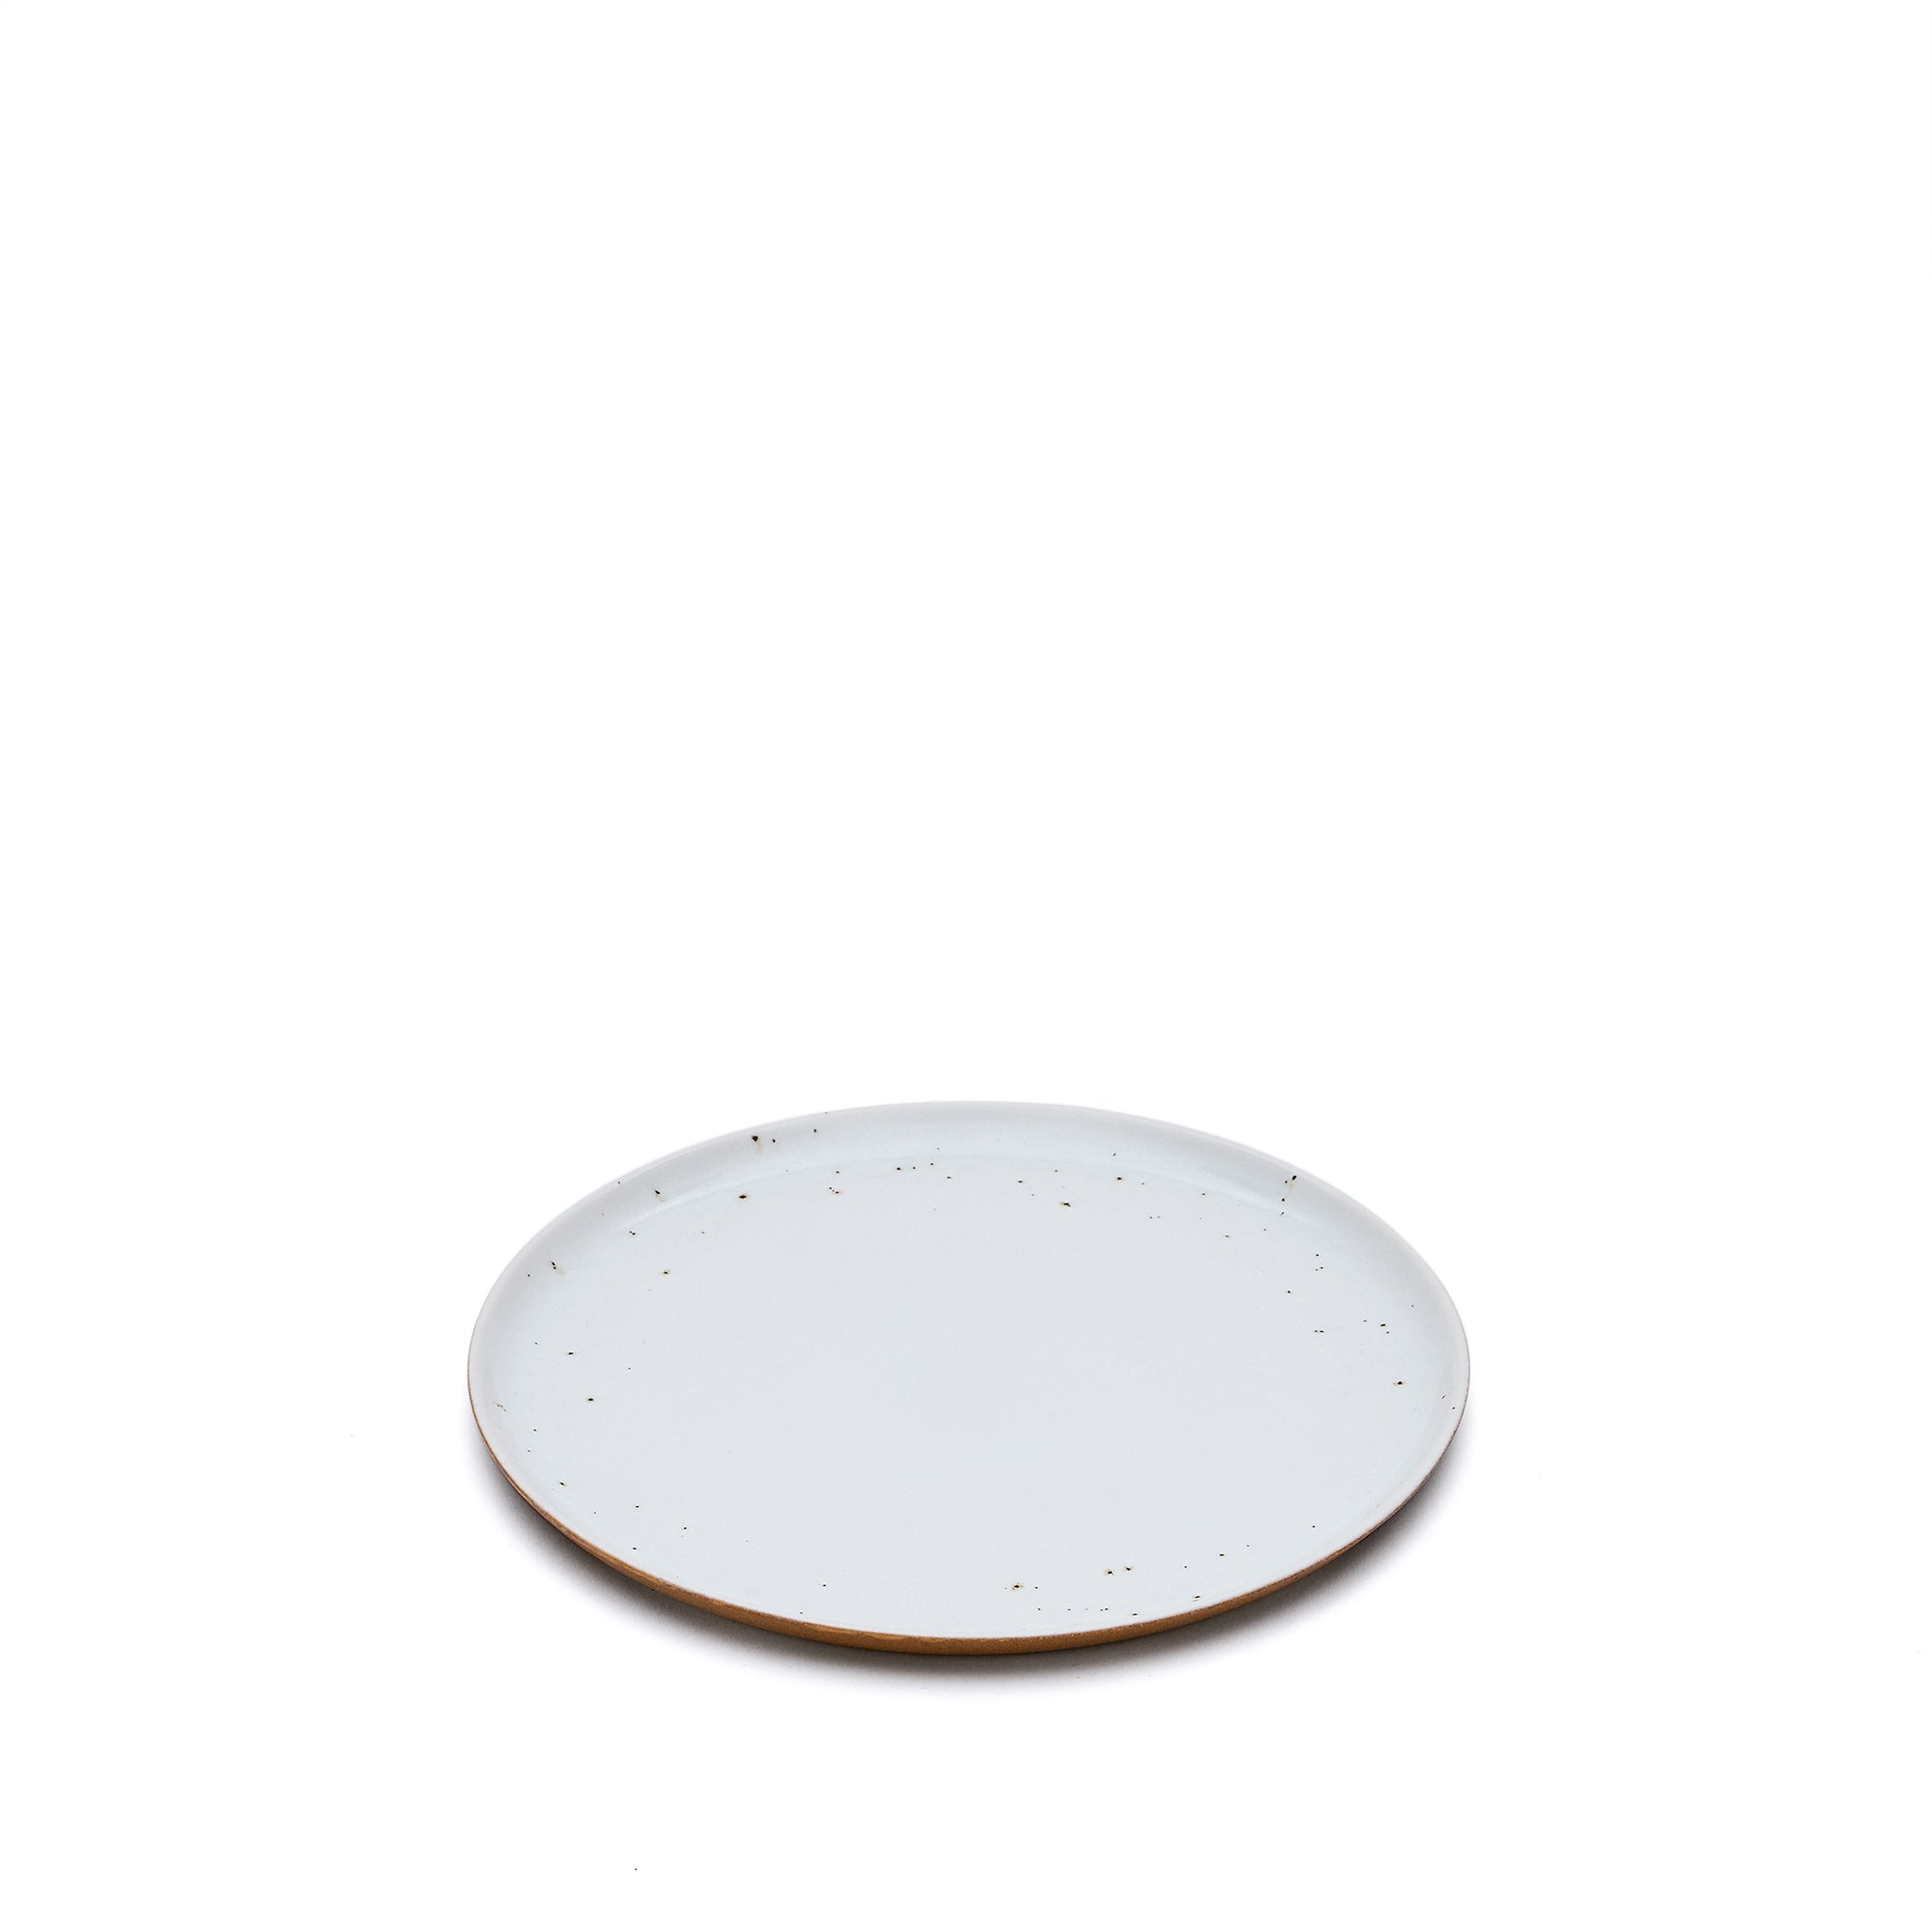 Publia white ceramic dessert plate